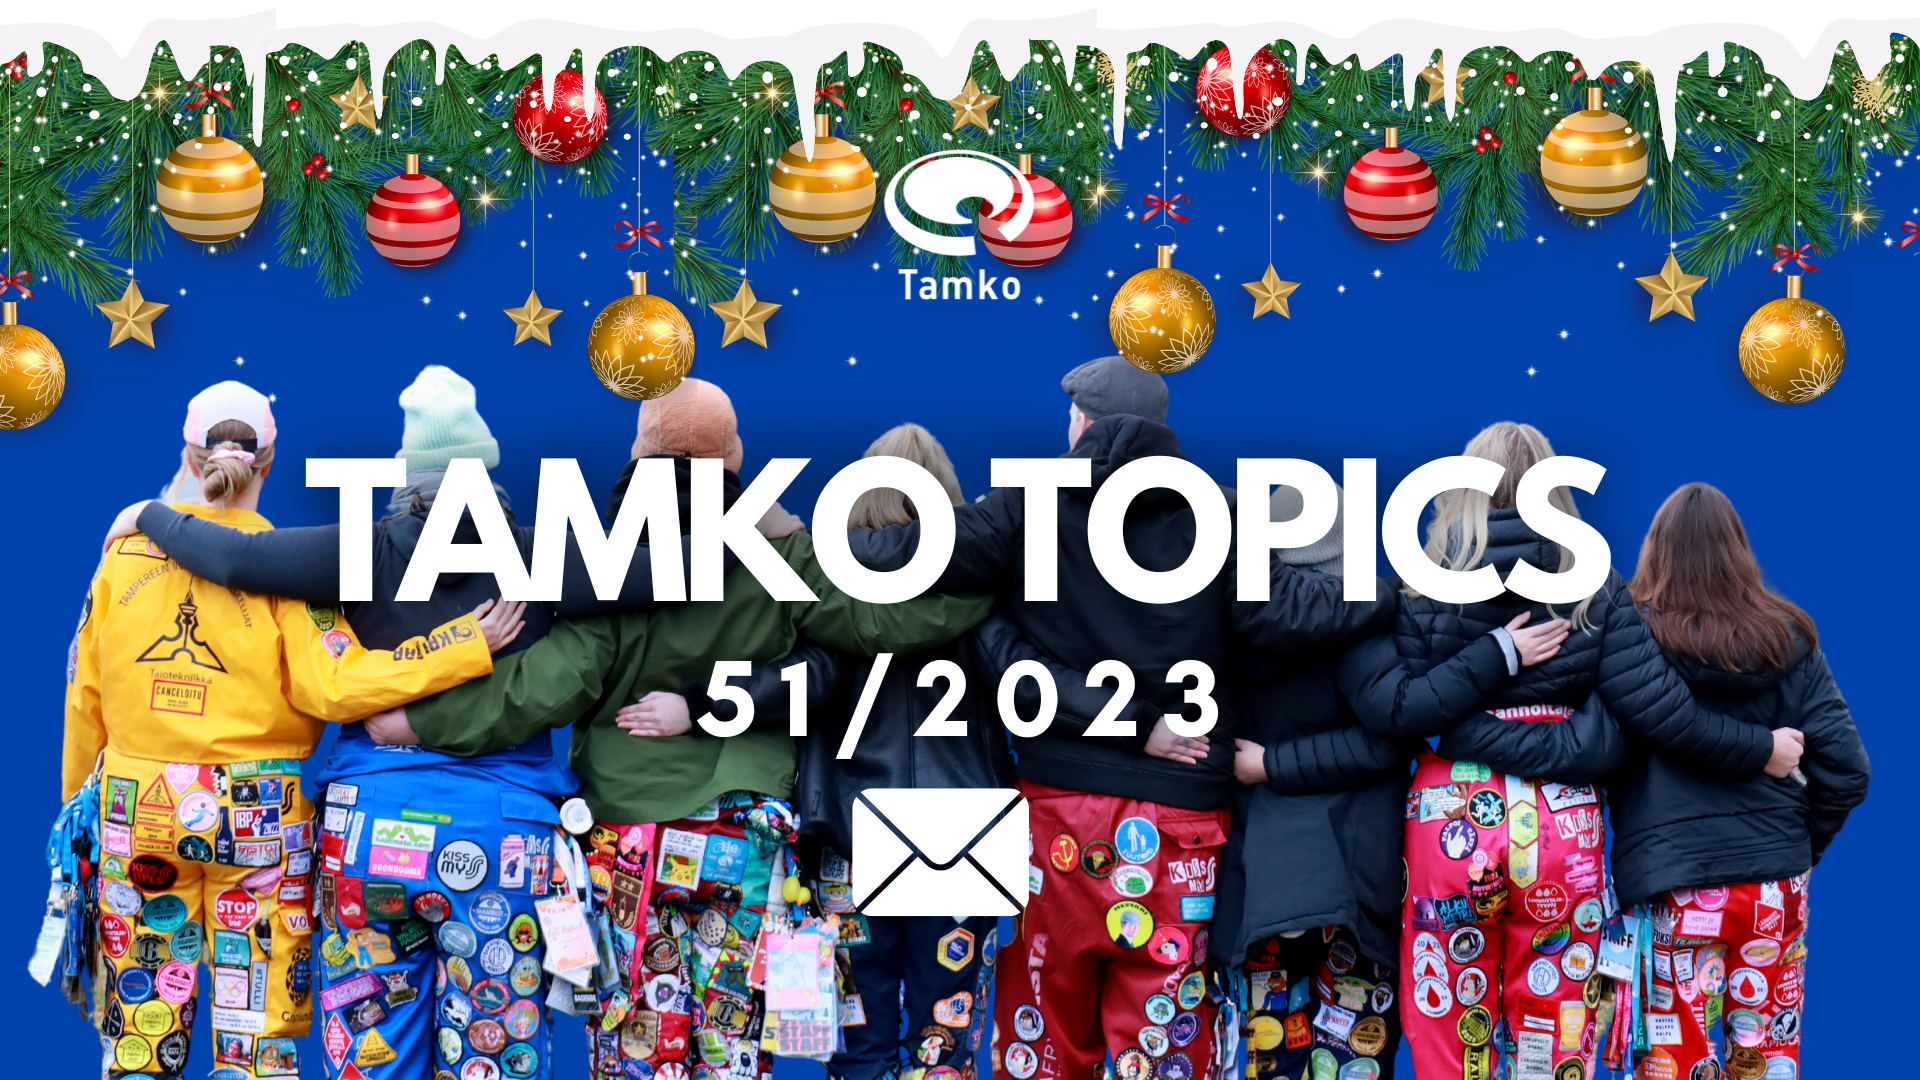 Tamko Topics 51/2023